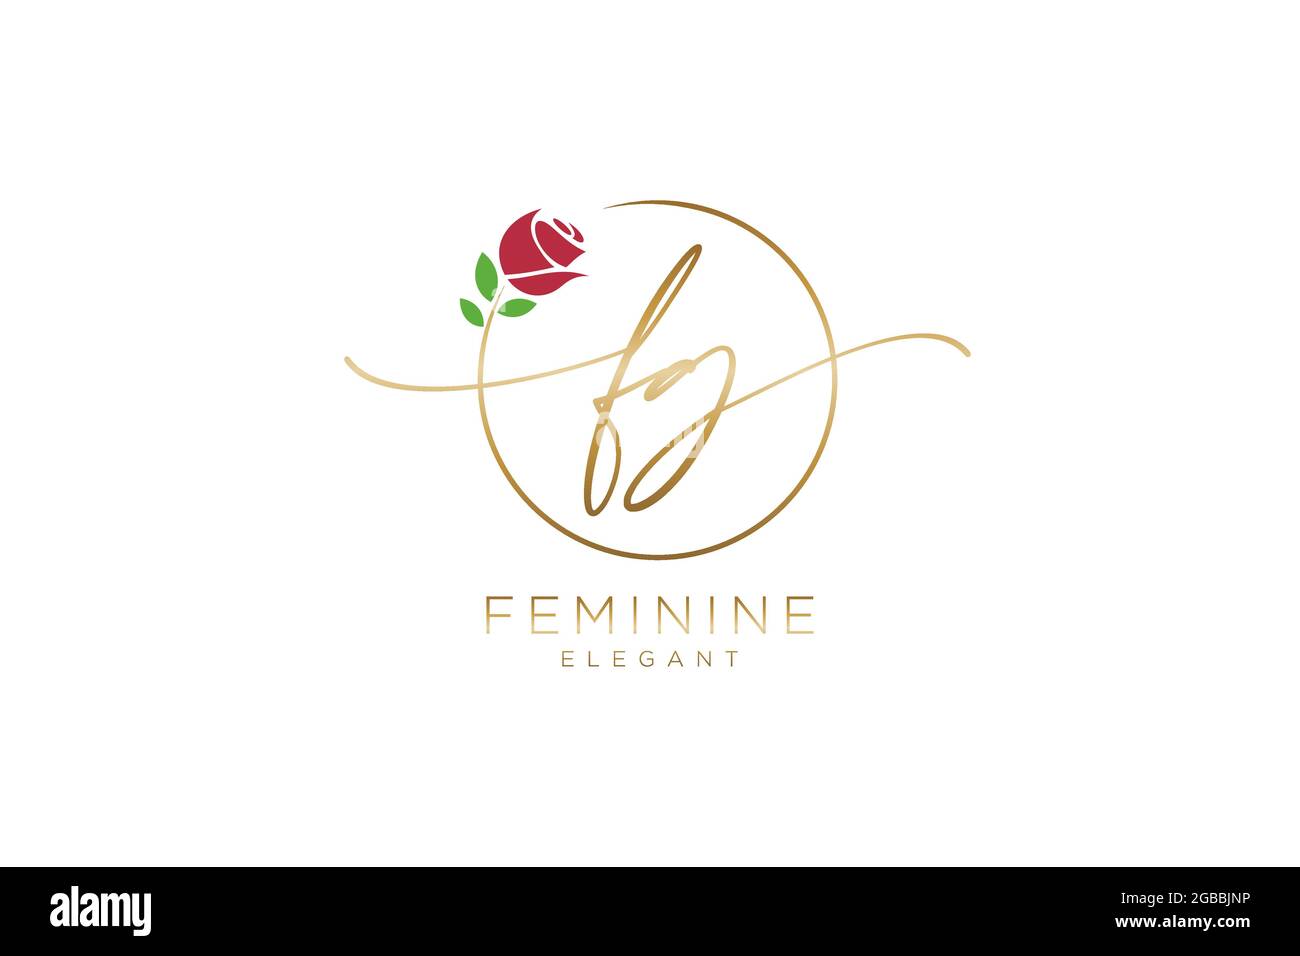 FG Feminine logo beauty monogram and elegant logo design, handwriting logo of initial signature, wedding, fashion, floral and botanical with creative Stock Vector